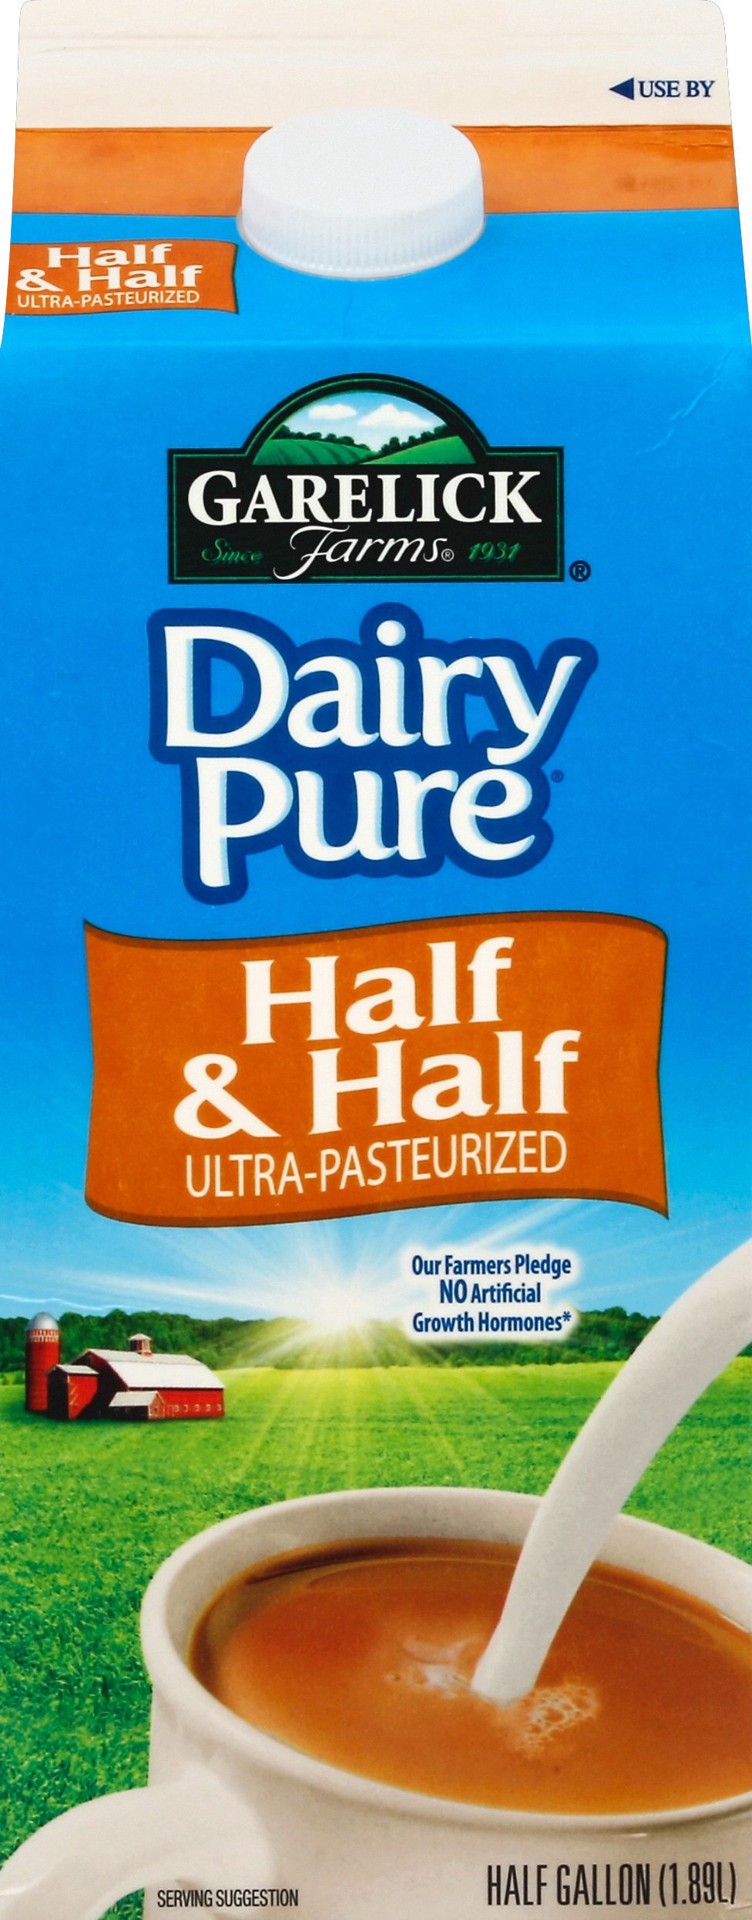 slide 1 of 5, Dairy Pure Half & Half, Half Gallon, 1/2 gal